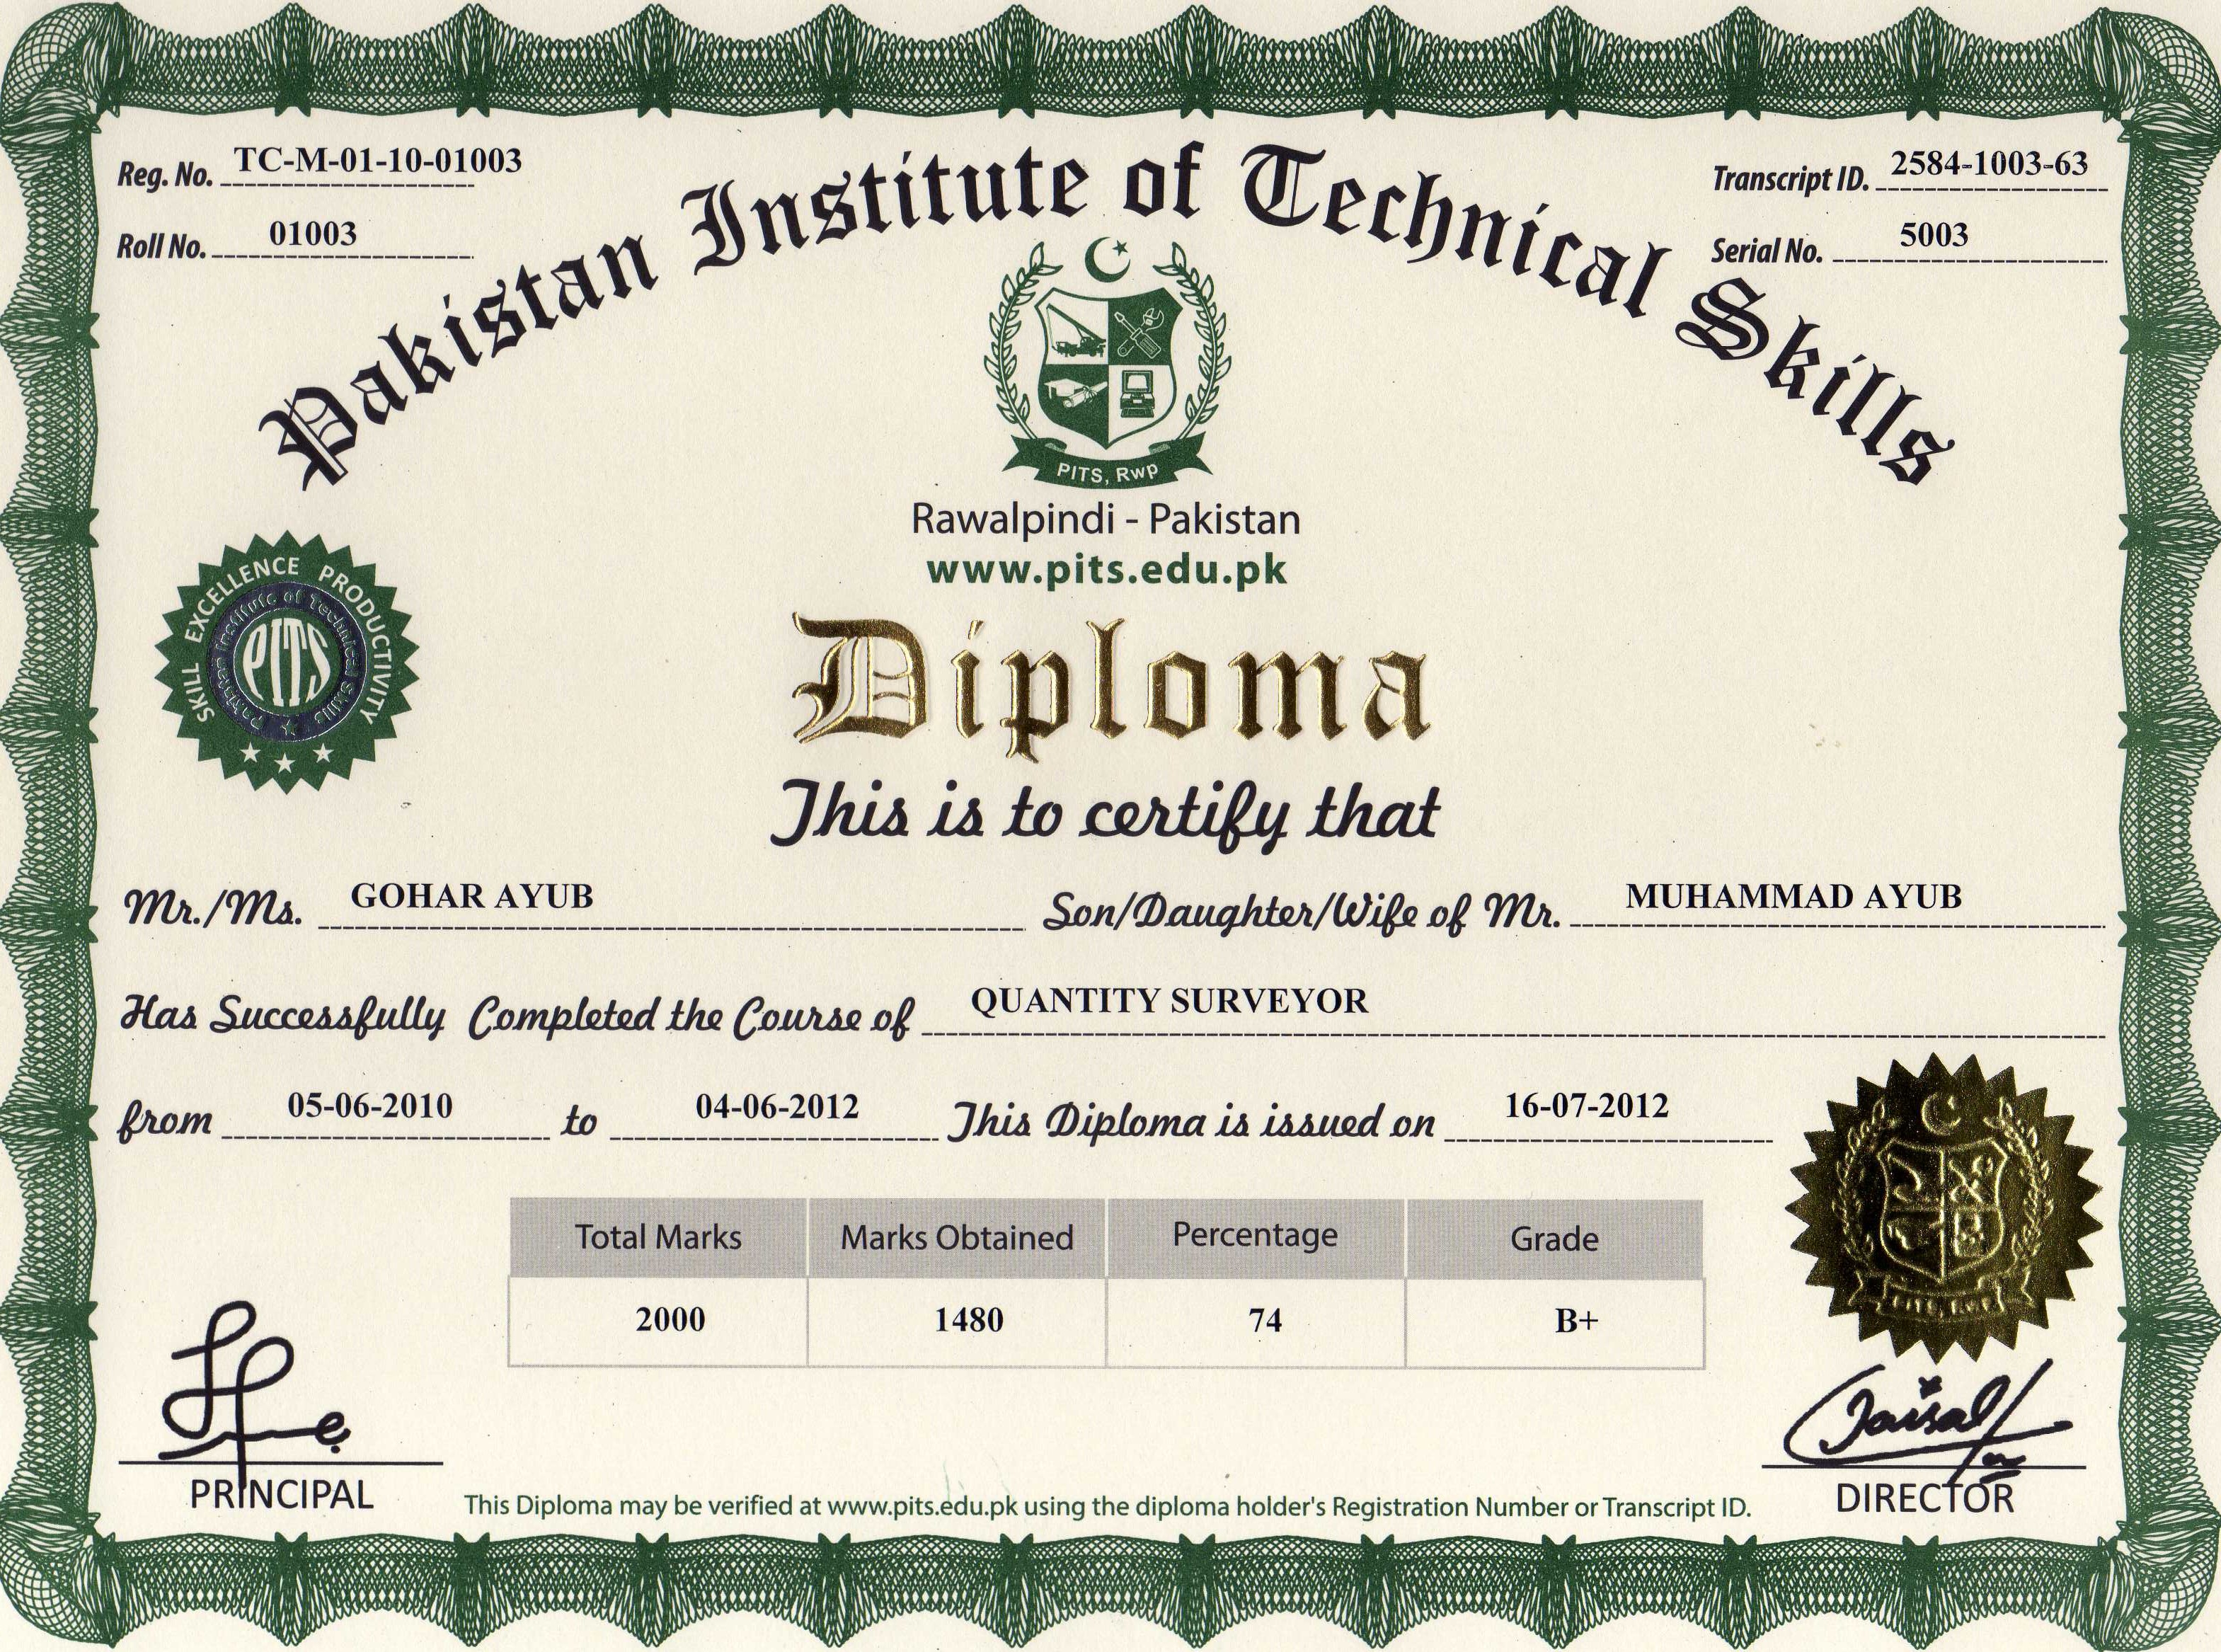 Ifrs Diploma Study Material Free Download Pdf